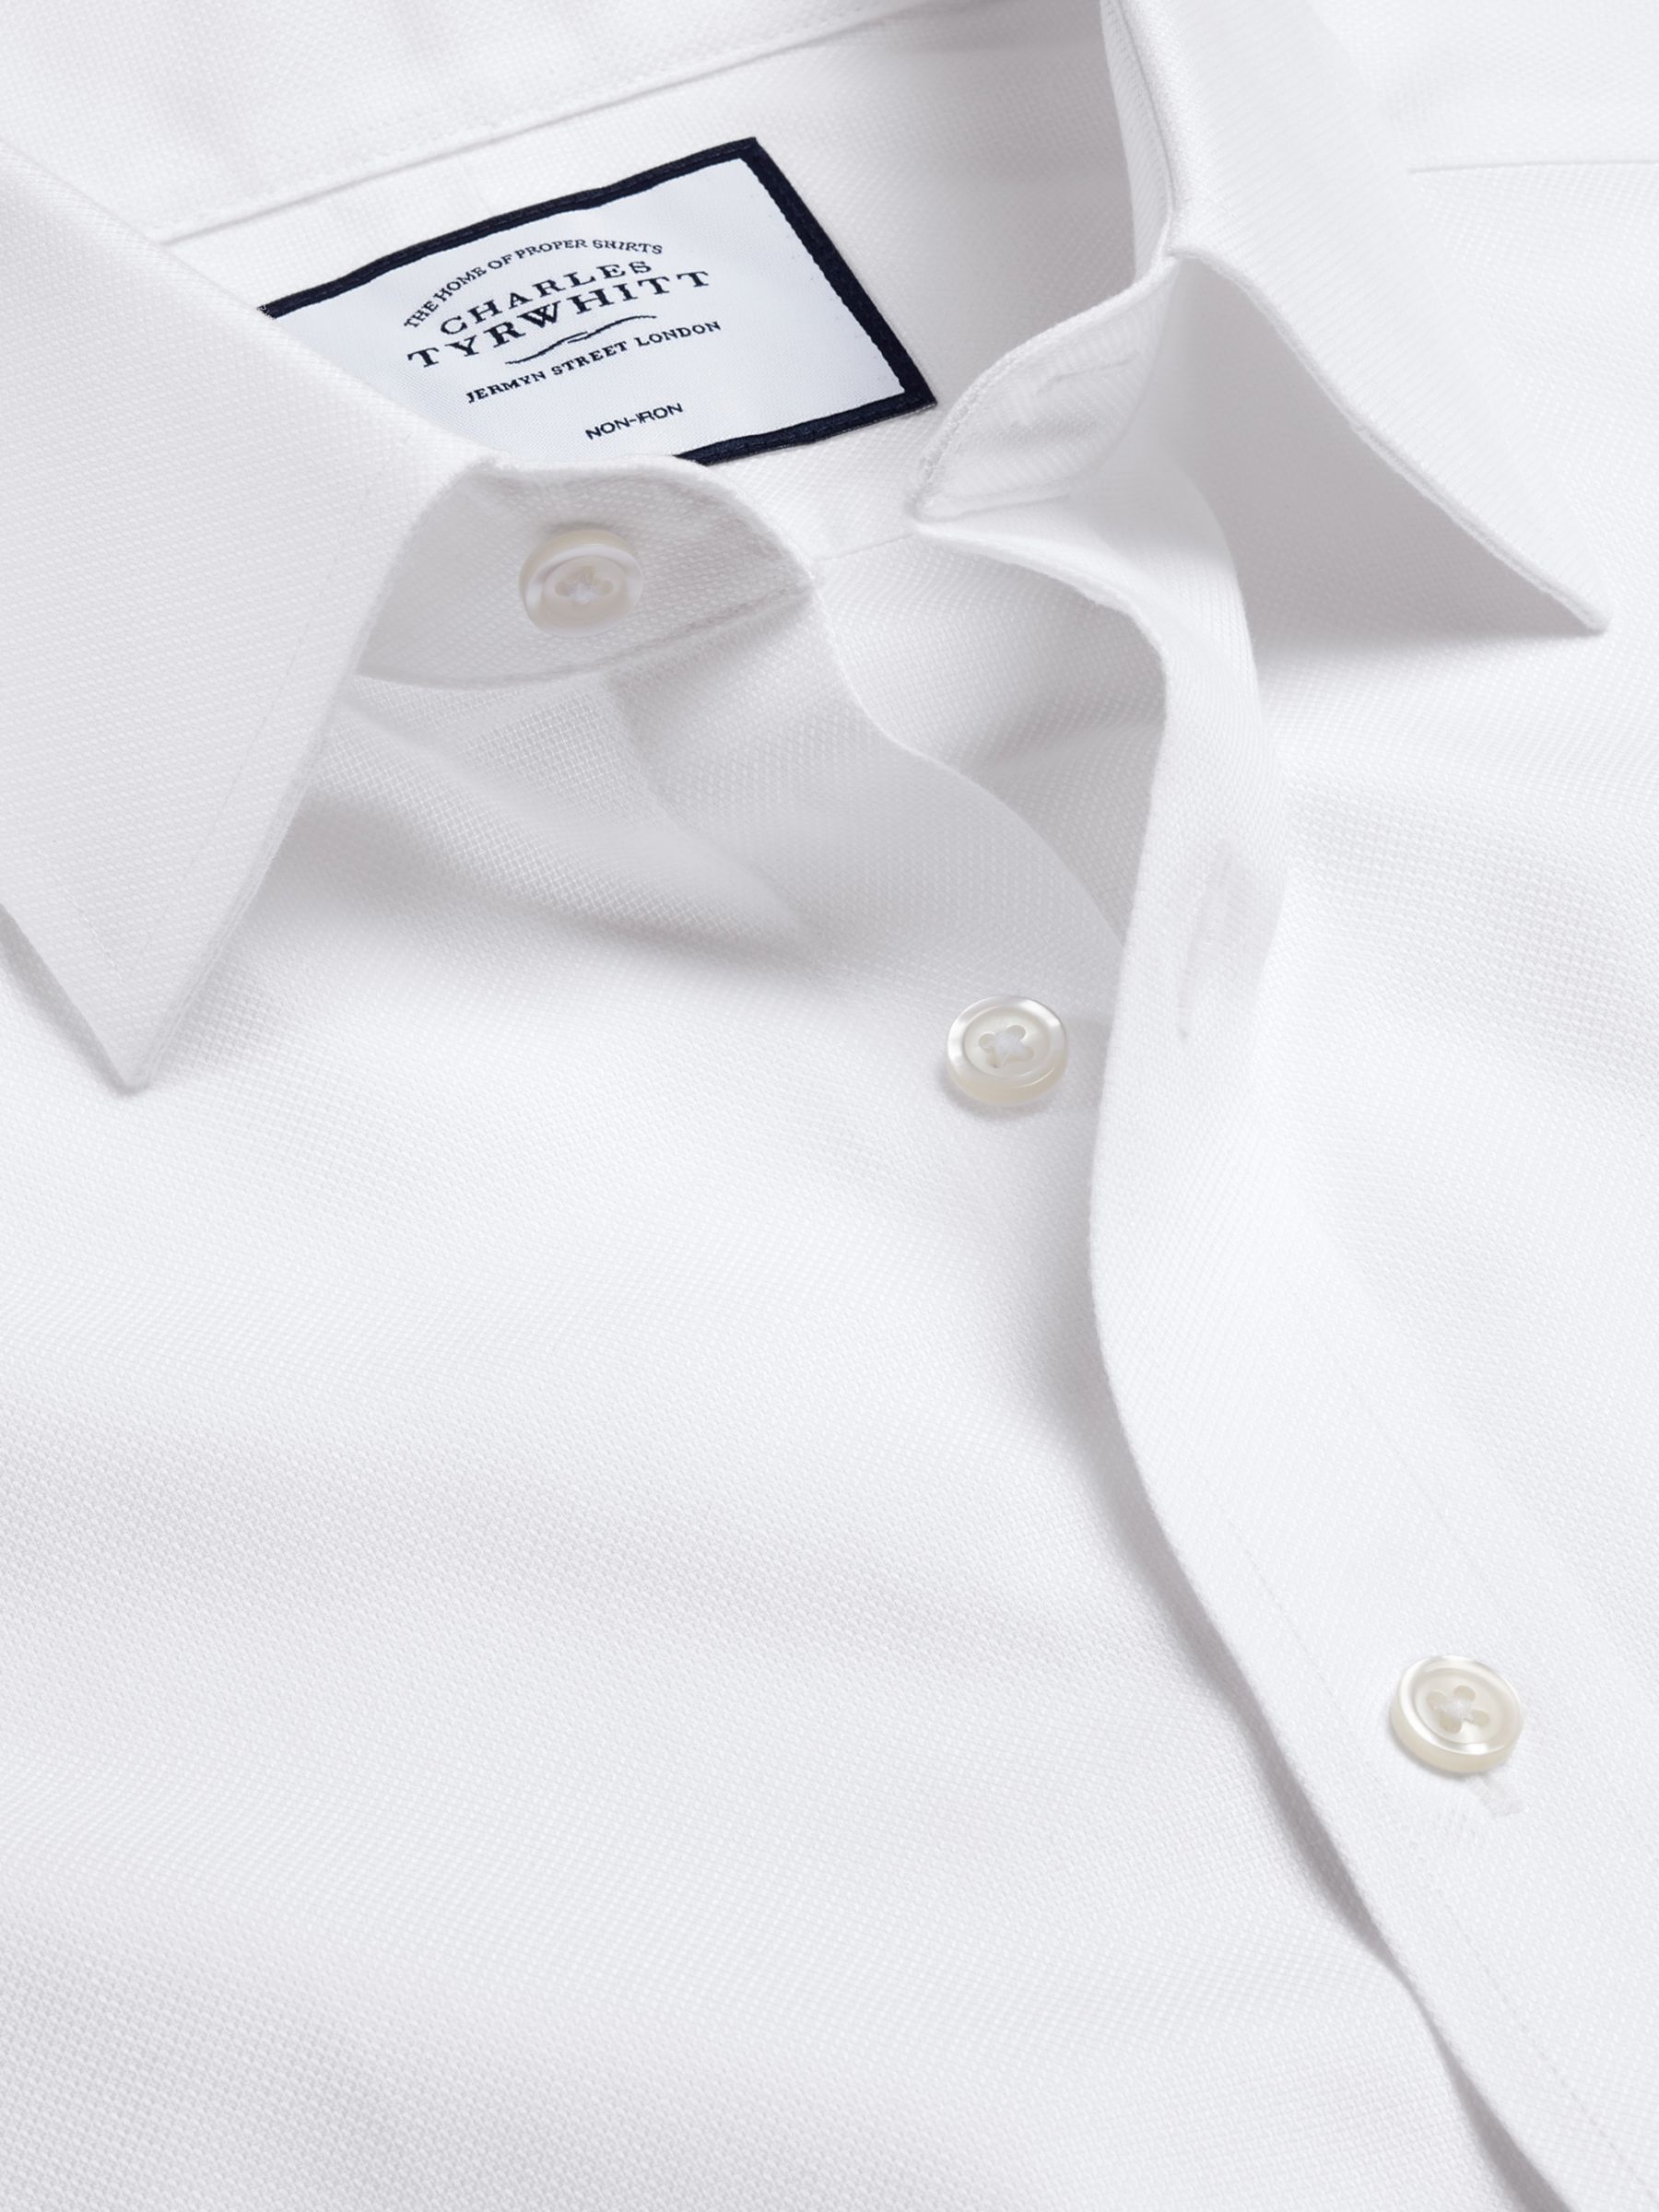 Charles Tyrwhitt Non-Iron Slim Fit Oxford Shirt, White at John Lewis ...